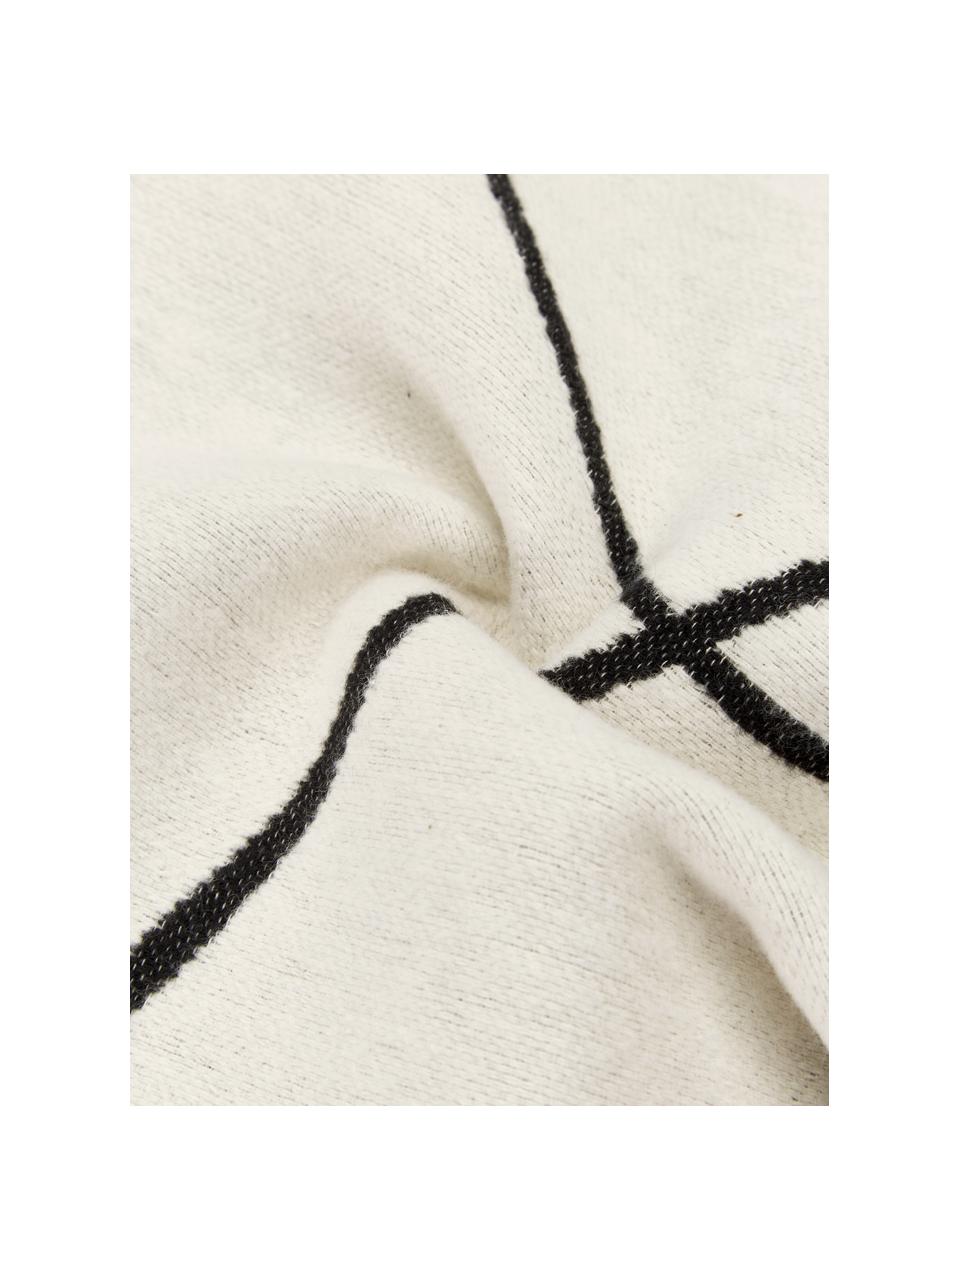 Baumwoll-Kissenhülle Nova mit abstraktem Print, Bezug: 85% Baumwolle, 8% Viskose, Cremeweiß, Schwarz, B 50 x L 50 cm